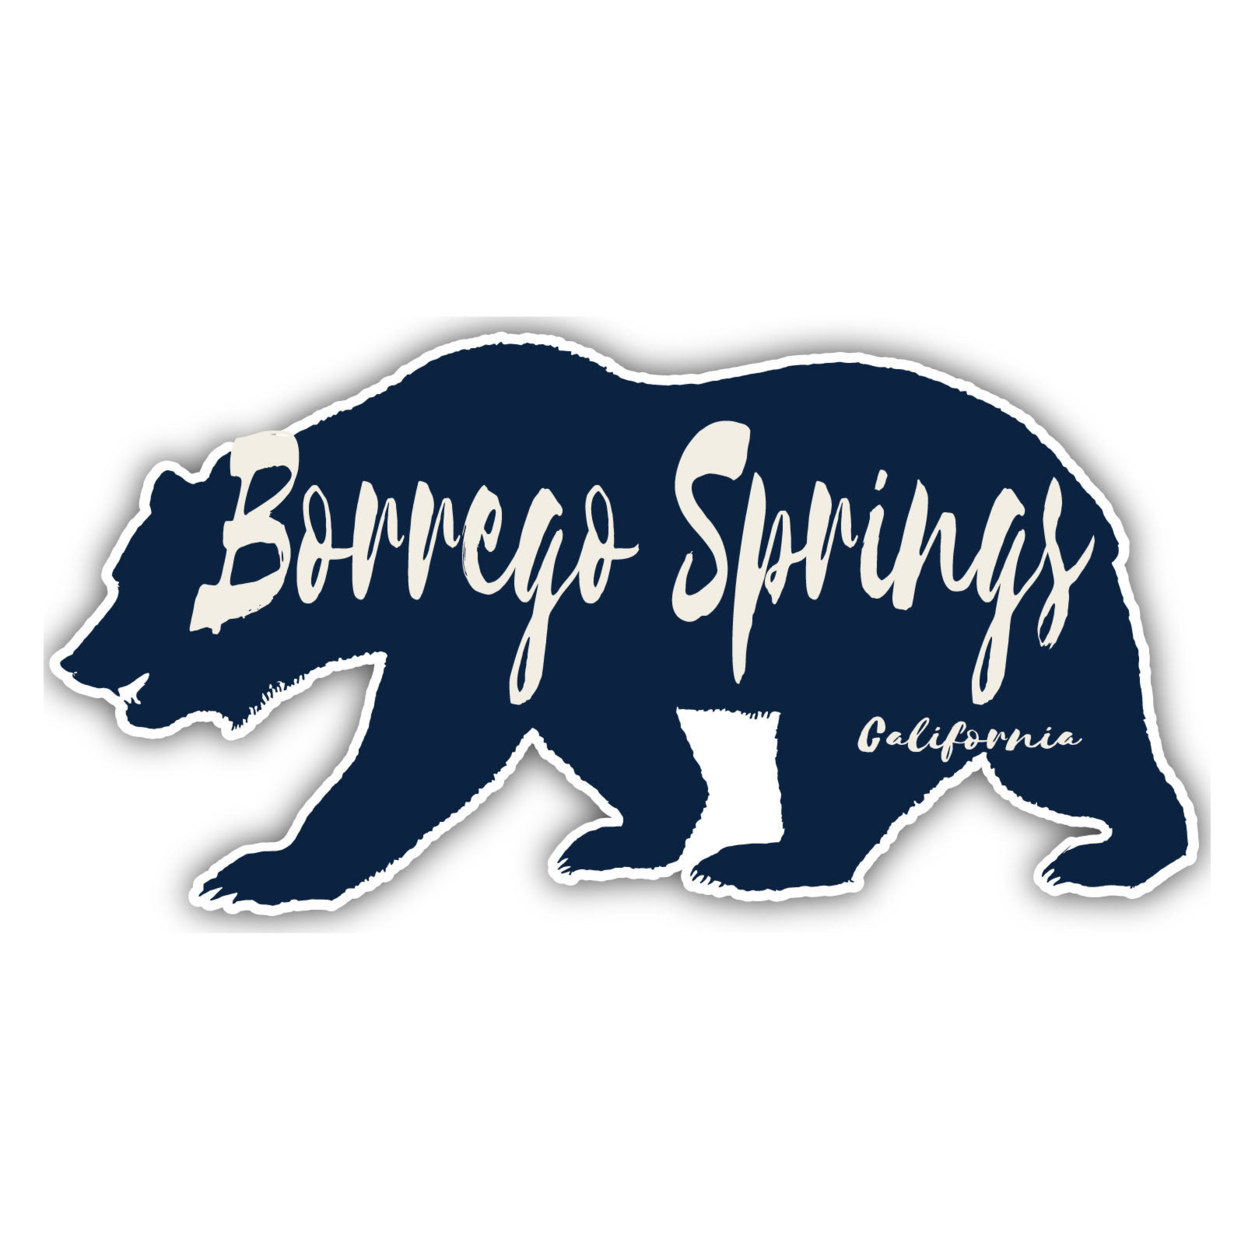 Borrego Springs California Souvenir Decorative Stickers (Choose Theme And Size) - 4-Pack, 12-Inch, Bear